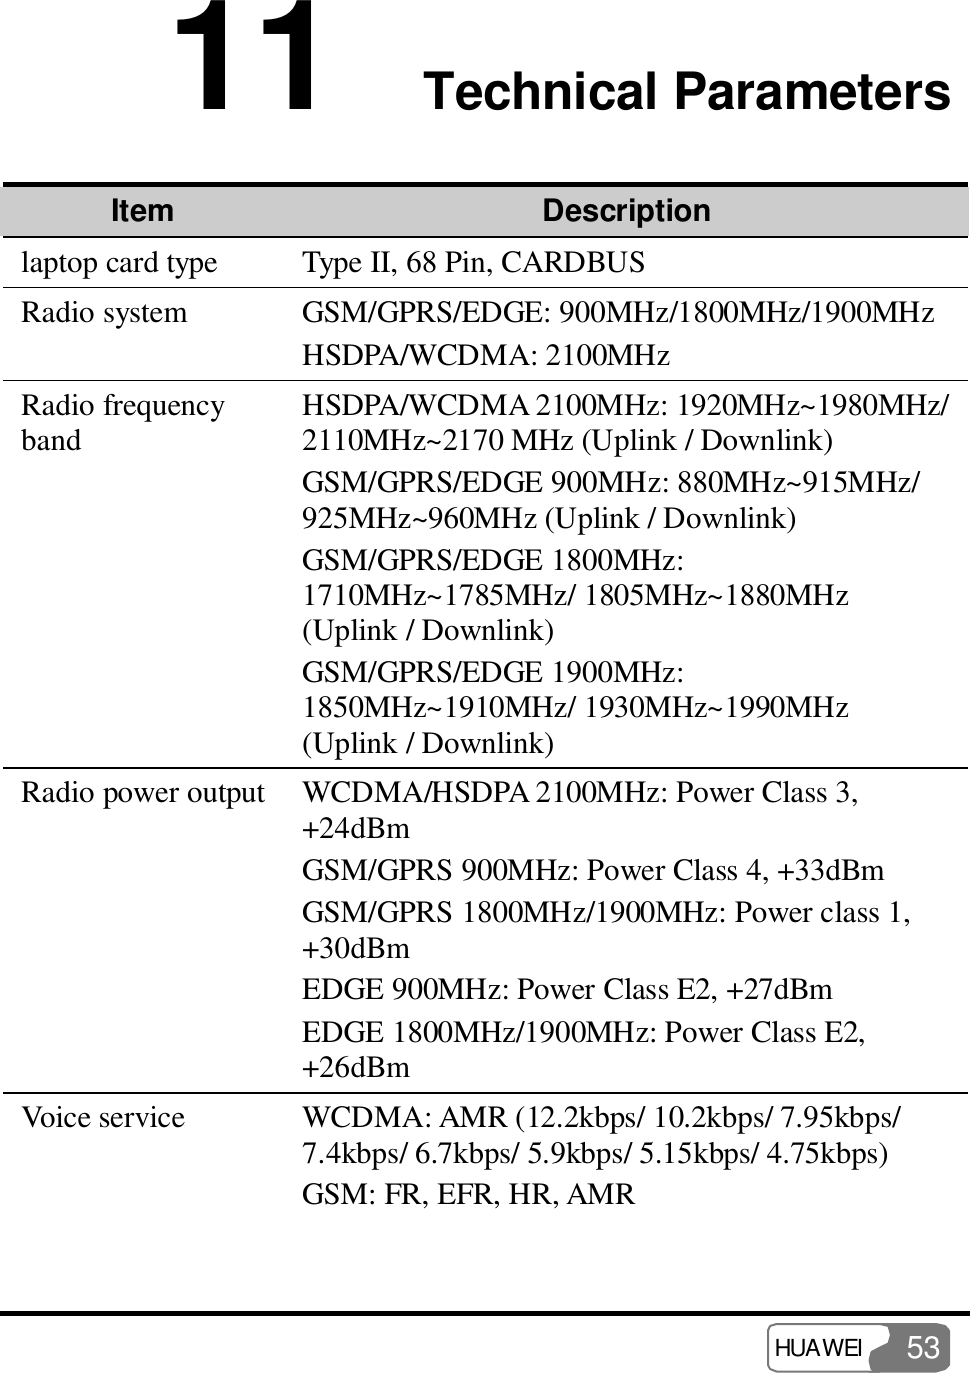  HUAWEI  53 11  Technical Parameters Item  Description laptop card type  Type II, 68 Pin, CARDBUS Radio system  GSM/GPRS/EDGE: 900MHz/1800MHz/1900MHz HSDPA/WCDMA: 2100MHz Radio frequency band  HSDPA/WCDMA 2100MHz: 1920MHz~1980MHz/ 2110MHz~2170 MHz (Uplink / Downlink) GSM/GPRS/EDGE 900MHz: 880MHz~915MHz/ 925MHz~960MHz (Uplink / Downlink) GSM/GPRS/EDGE 1800MHz: 1710MHz~1785MHz/ 1805MHz~1880MHz (Uplink / Downlink) GSM/GPRS/EDGE 1900MHz: 1850MHz~1910MHz/ 1930MHz~1990MHz (Uplink / Downlink) Radio power output WCDMA/HSDPA 2100MHz: Power Class 3, +24dBm  GSM/GPRS 900MHz: Power Class 4, +33dBm GSM/GPRS 1800MHz/1900MHz: Power class 1, +30dBm  EDGE 900MHz: Power Class E2, +27dBm EDGE 1800MHz/1900MHz: Power Class E2, +26dBm Voice service  WCDMA: AMR (12.2kbps/ 10.2kbps/ 7.95kbps/ 7.4kbps/ 6.7kbps/ 5.9kbps/ 5.15kbps/ 4.75kbps) GSM: FR, EFR, HR, AMR 